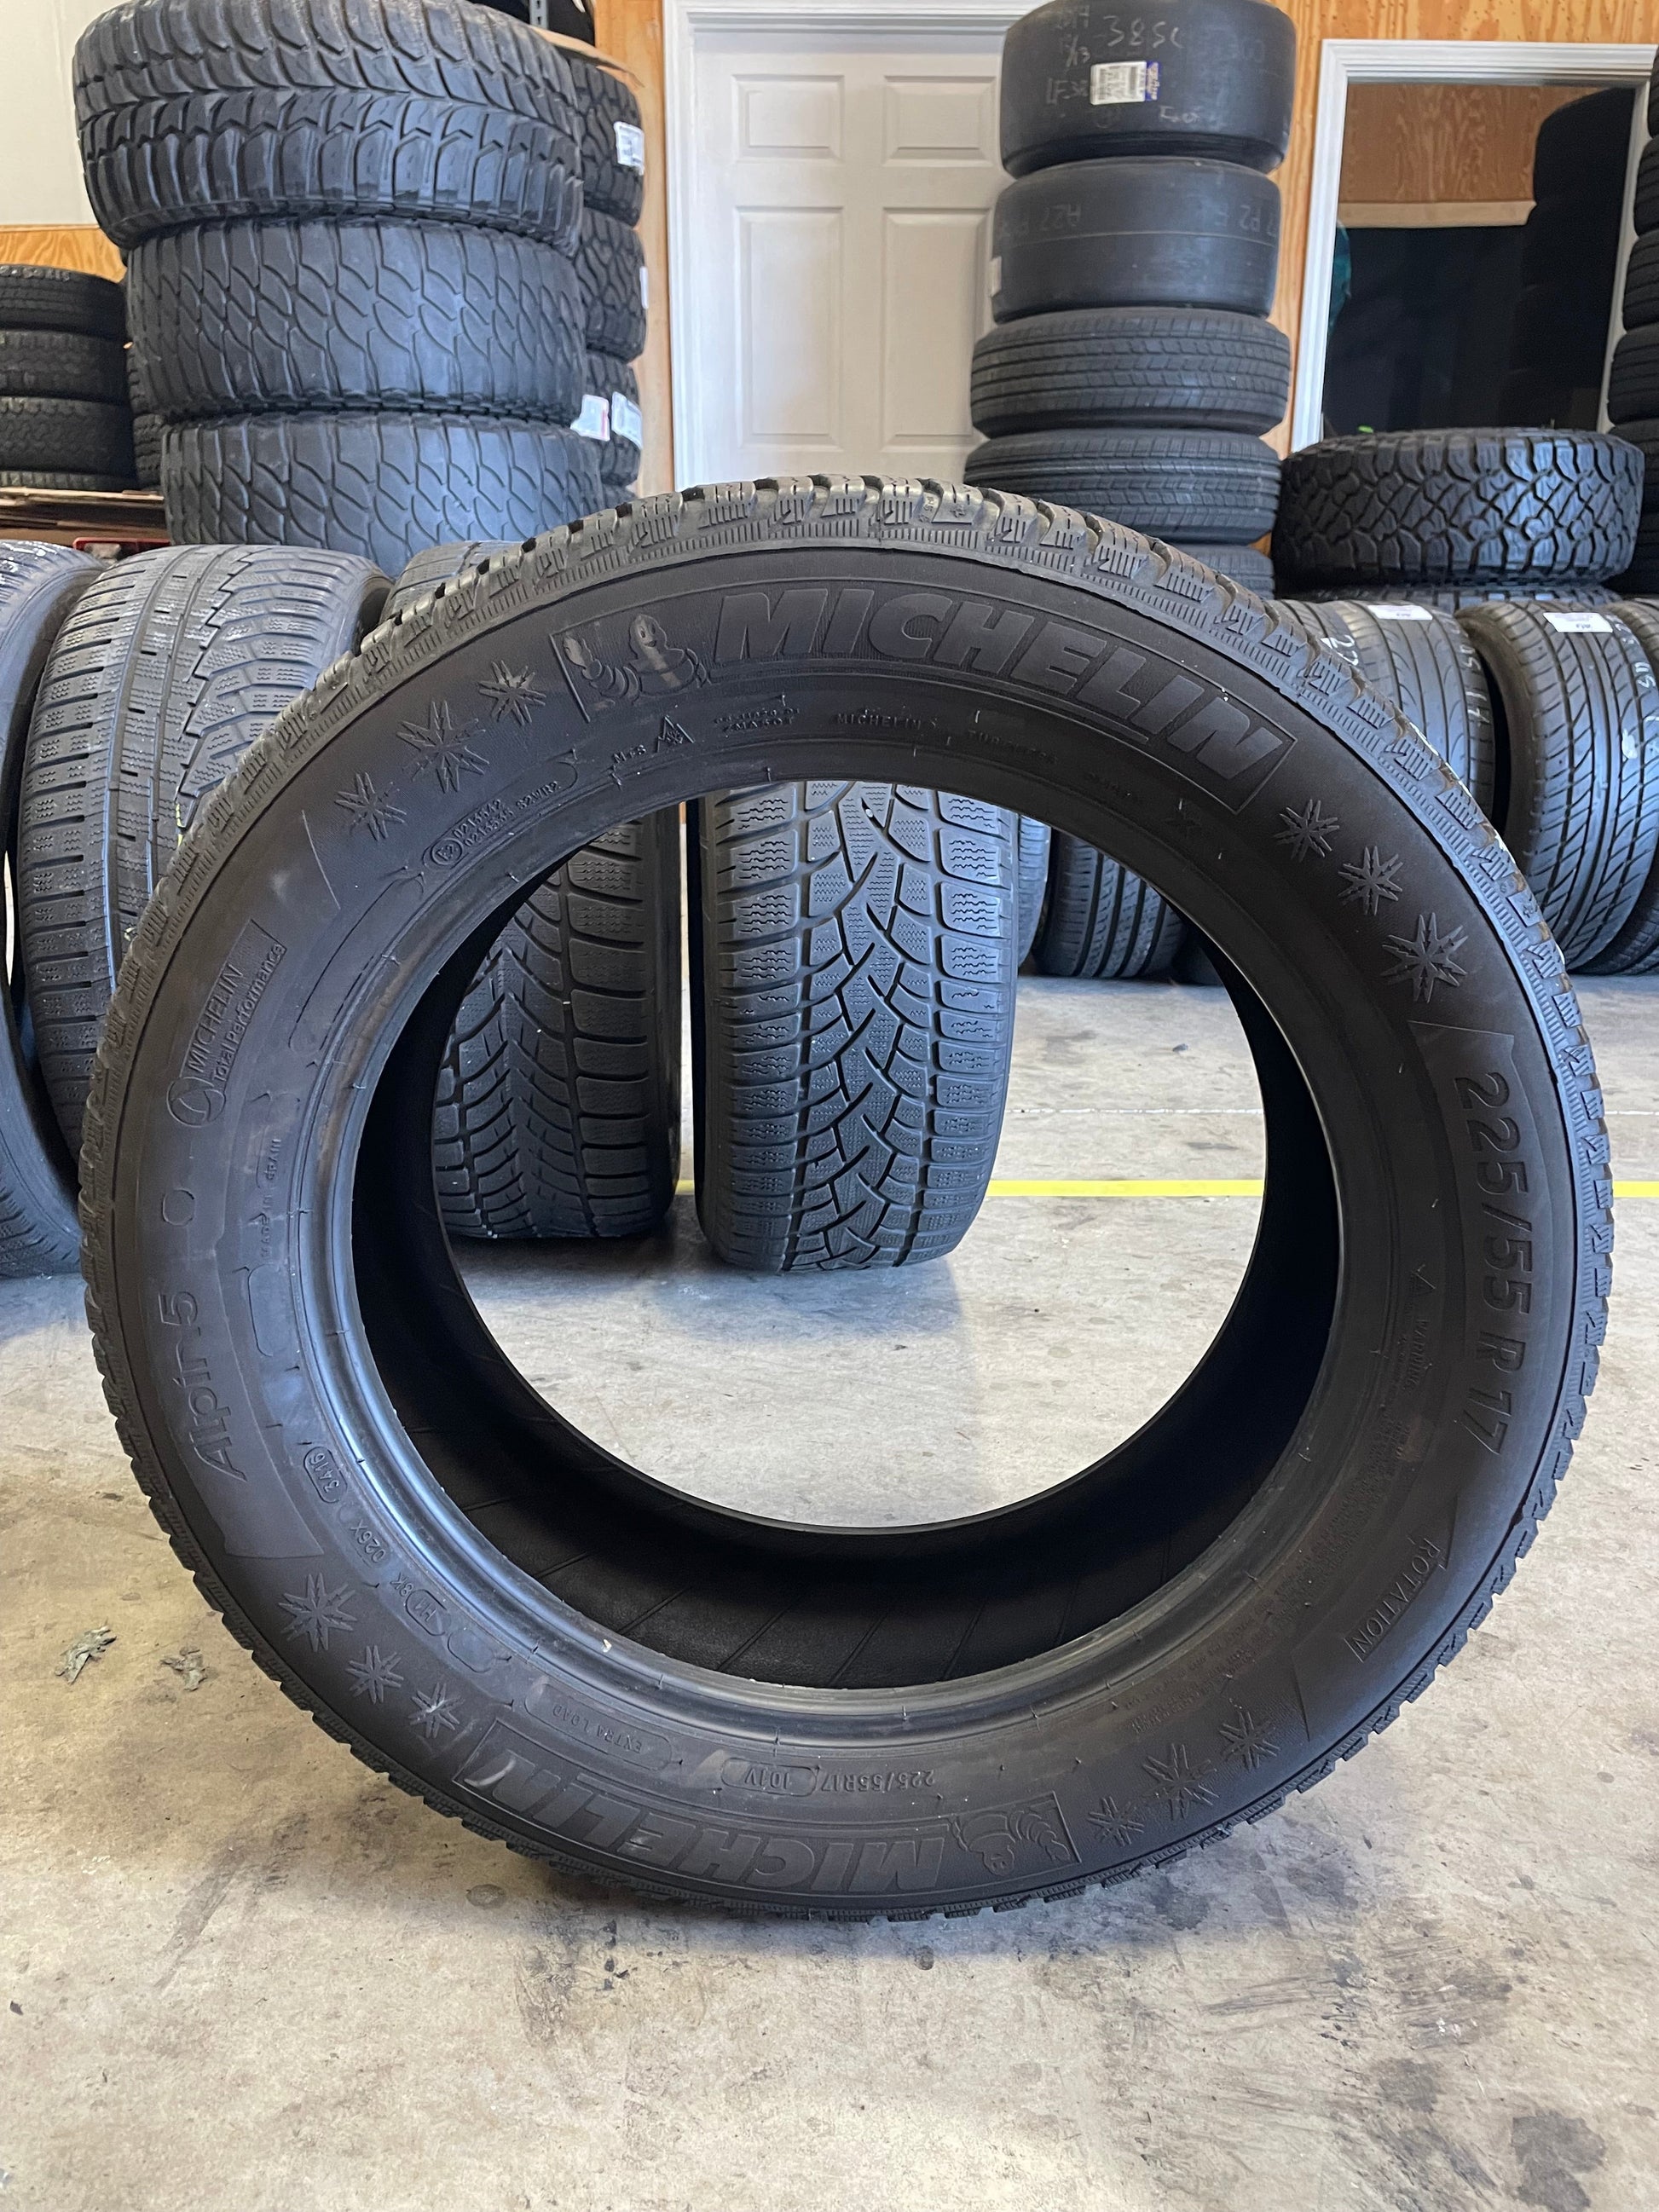 SINGLE 225/55R17 Michelin Alpin 5 101 V XL - Used Tires